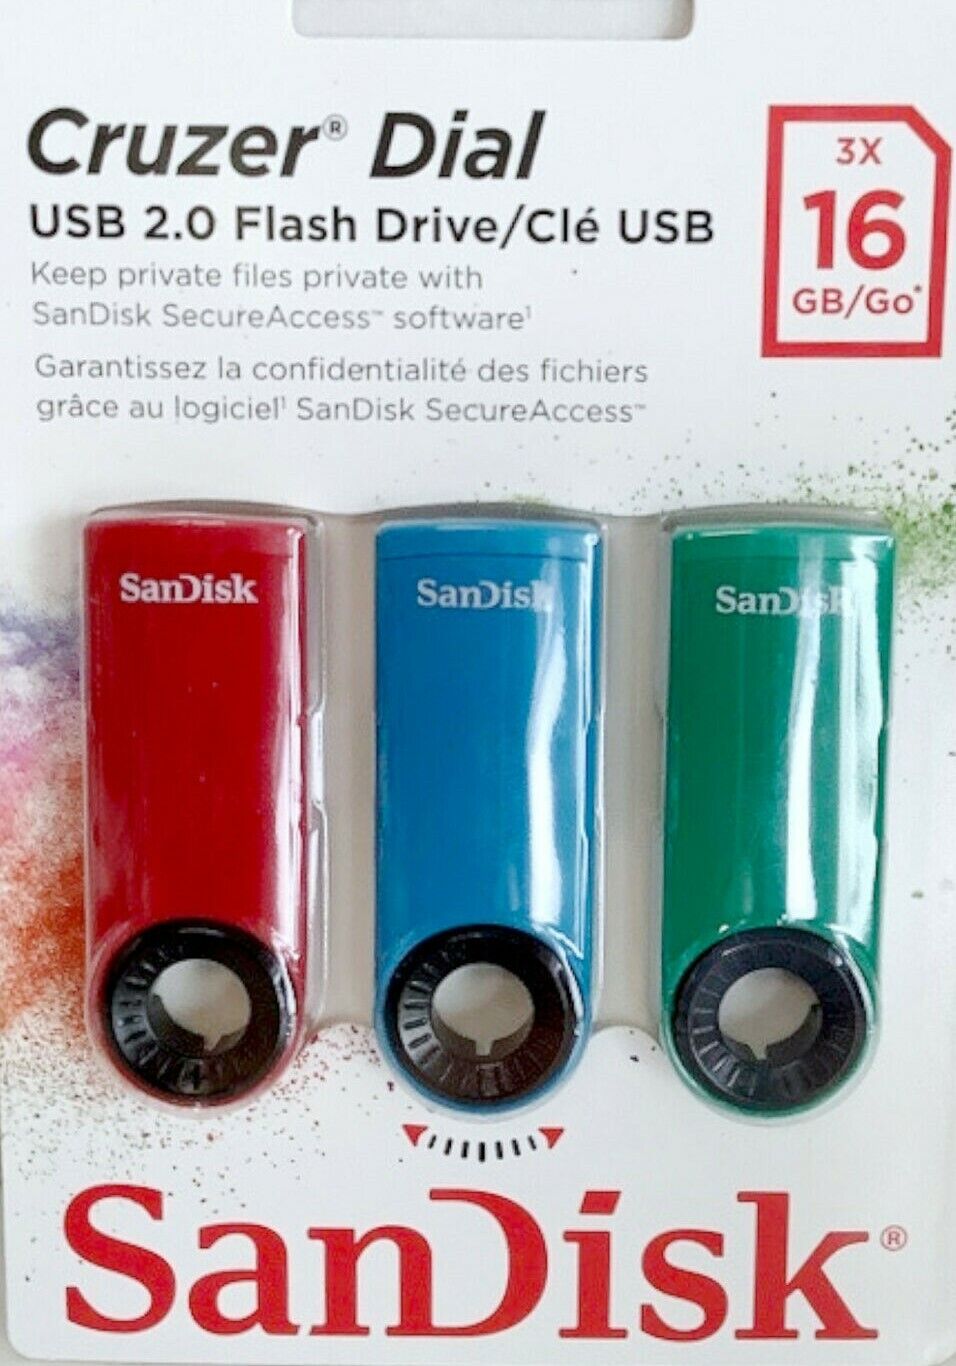 3 X 16GB SanDisk USB 2.0 Cruzer dial Flash Drive